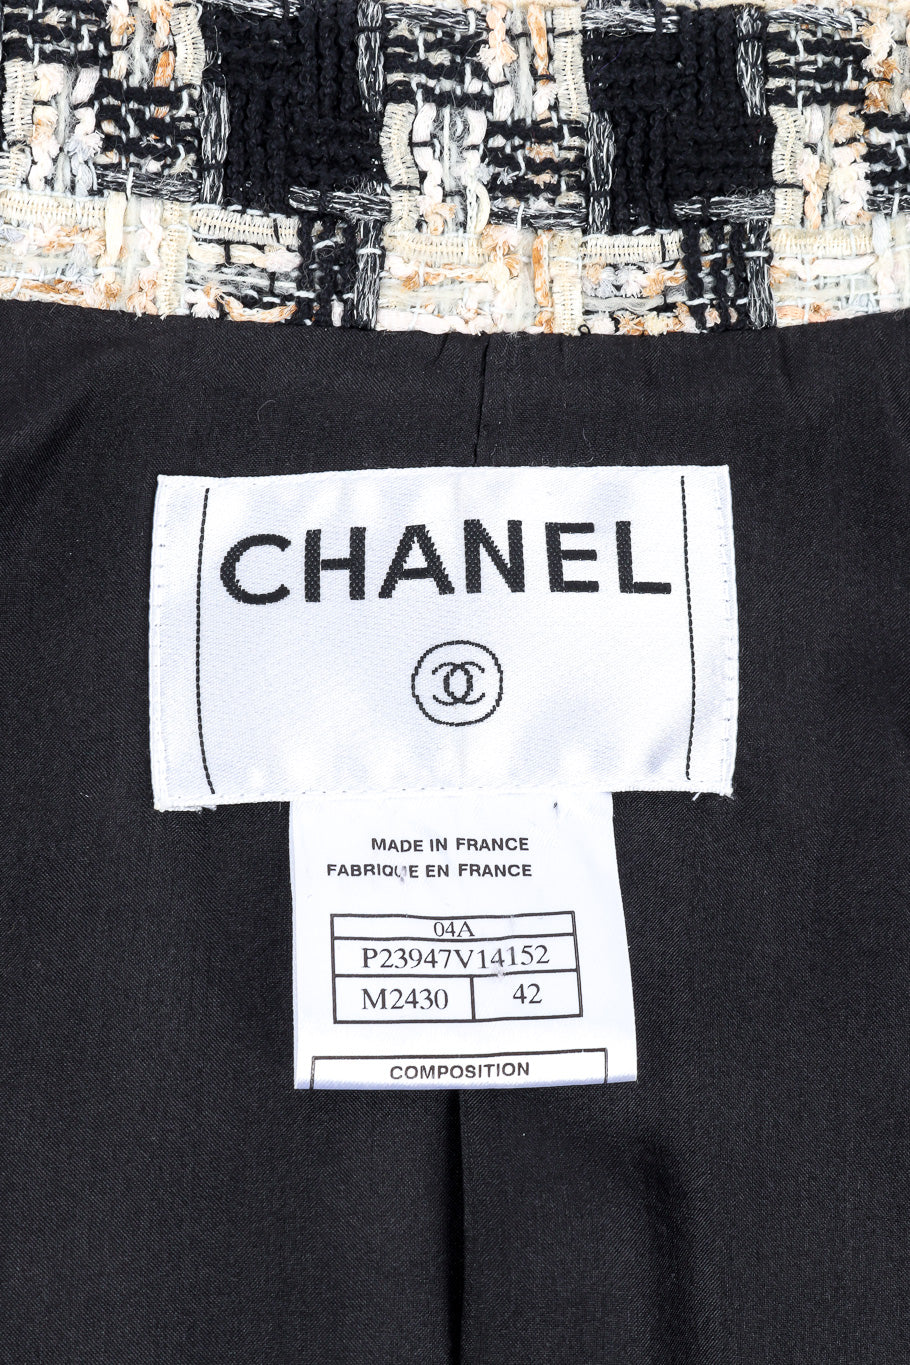 Bouclé check jacket by Chanel label @recessla